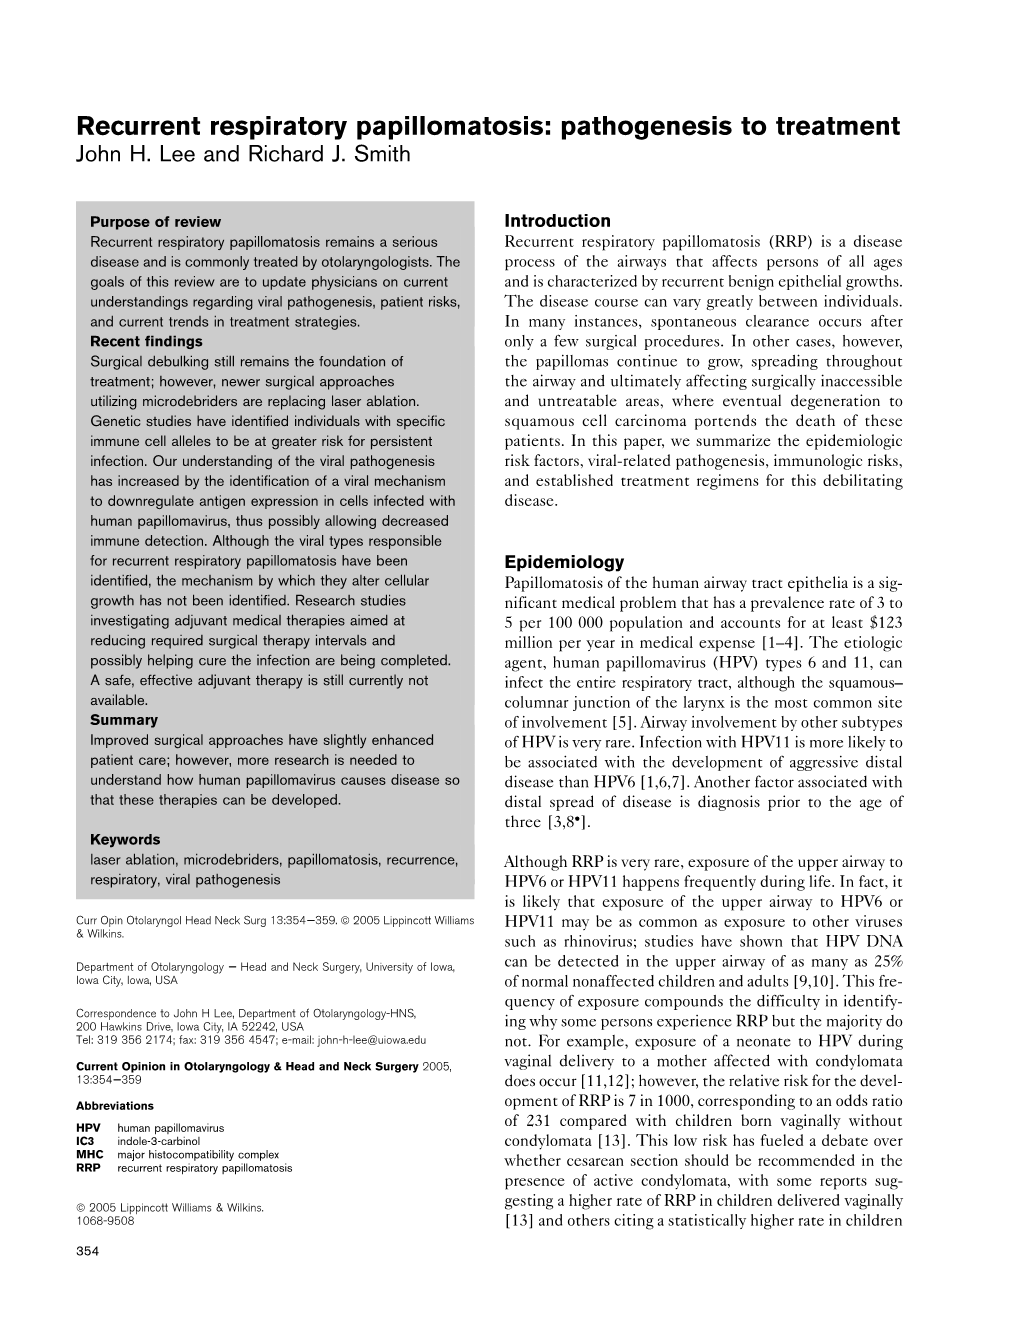 Recurrent Respiratory Papillomatosis: Pathogenesis to Treatment John H